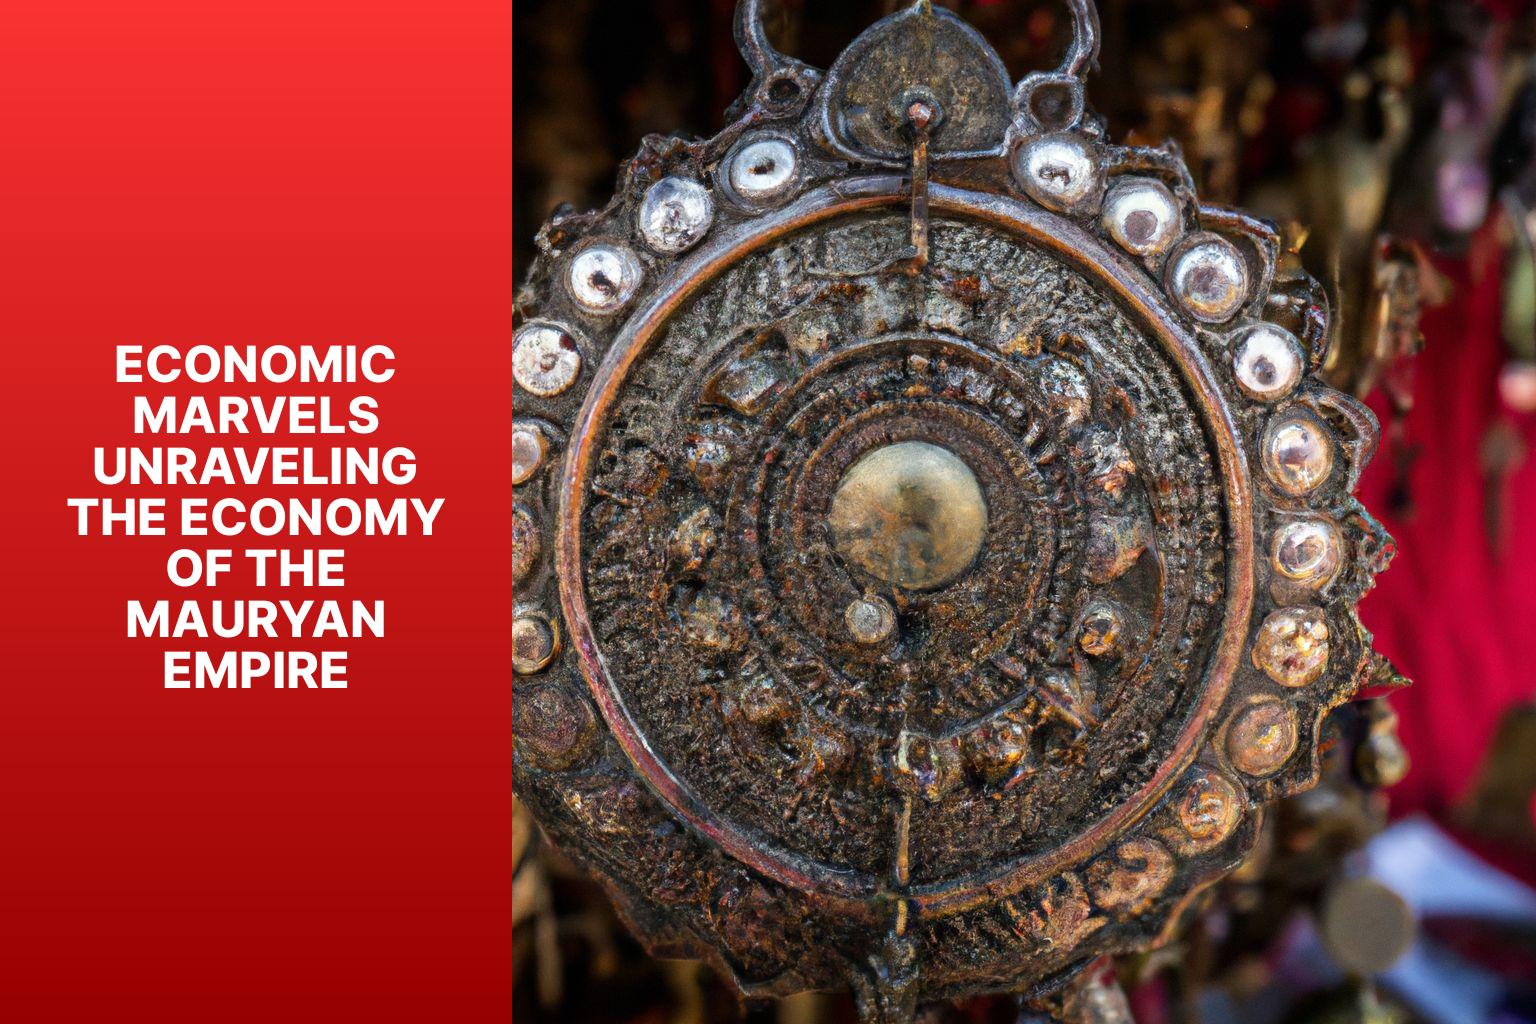 Economic Marvels Unraveling the Economy of the Mauryan Empire